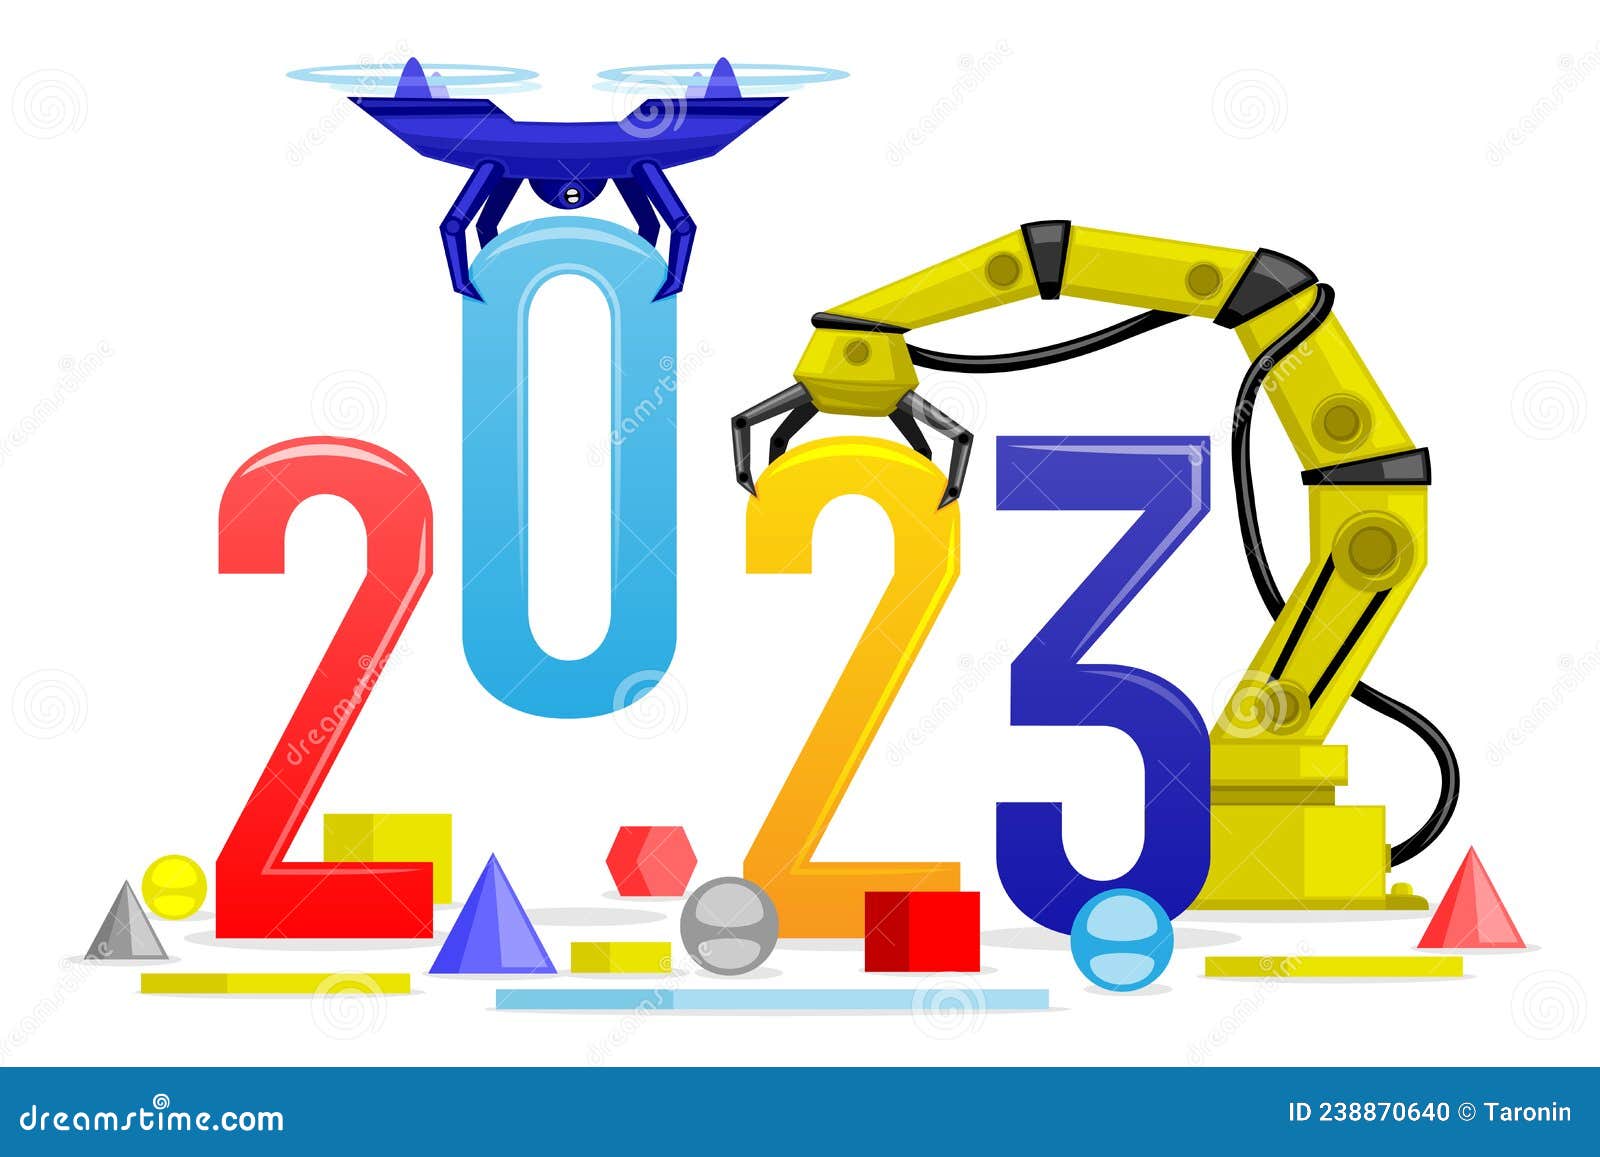 new year 2023 drone amazing presentation